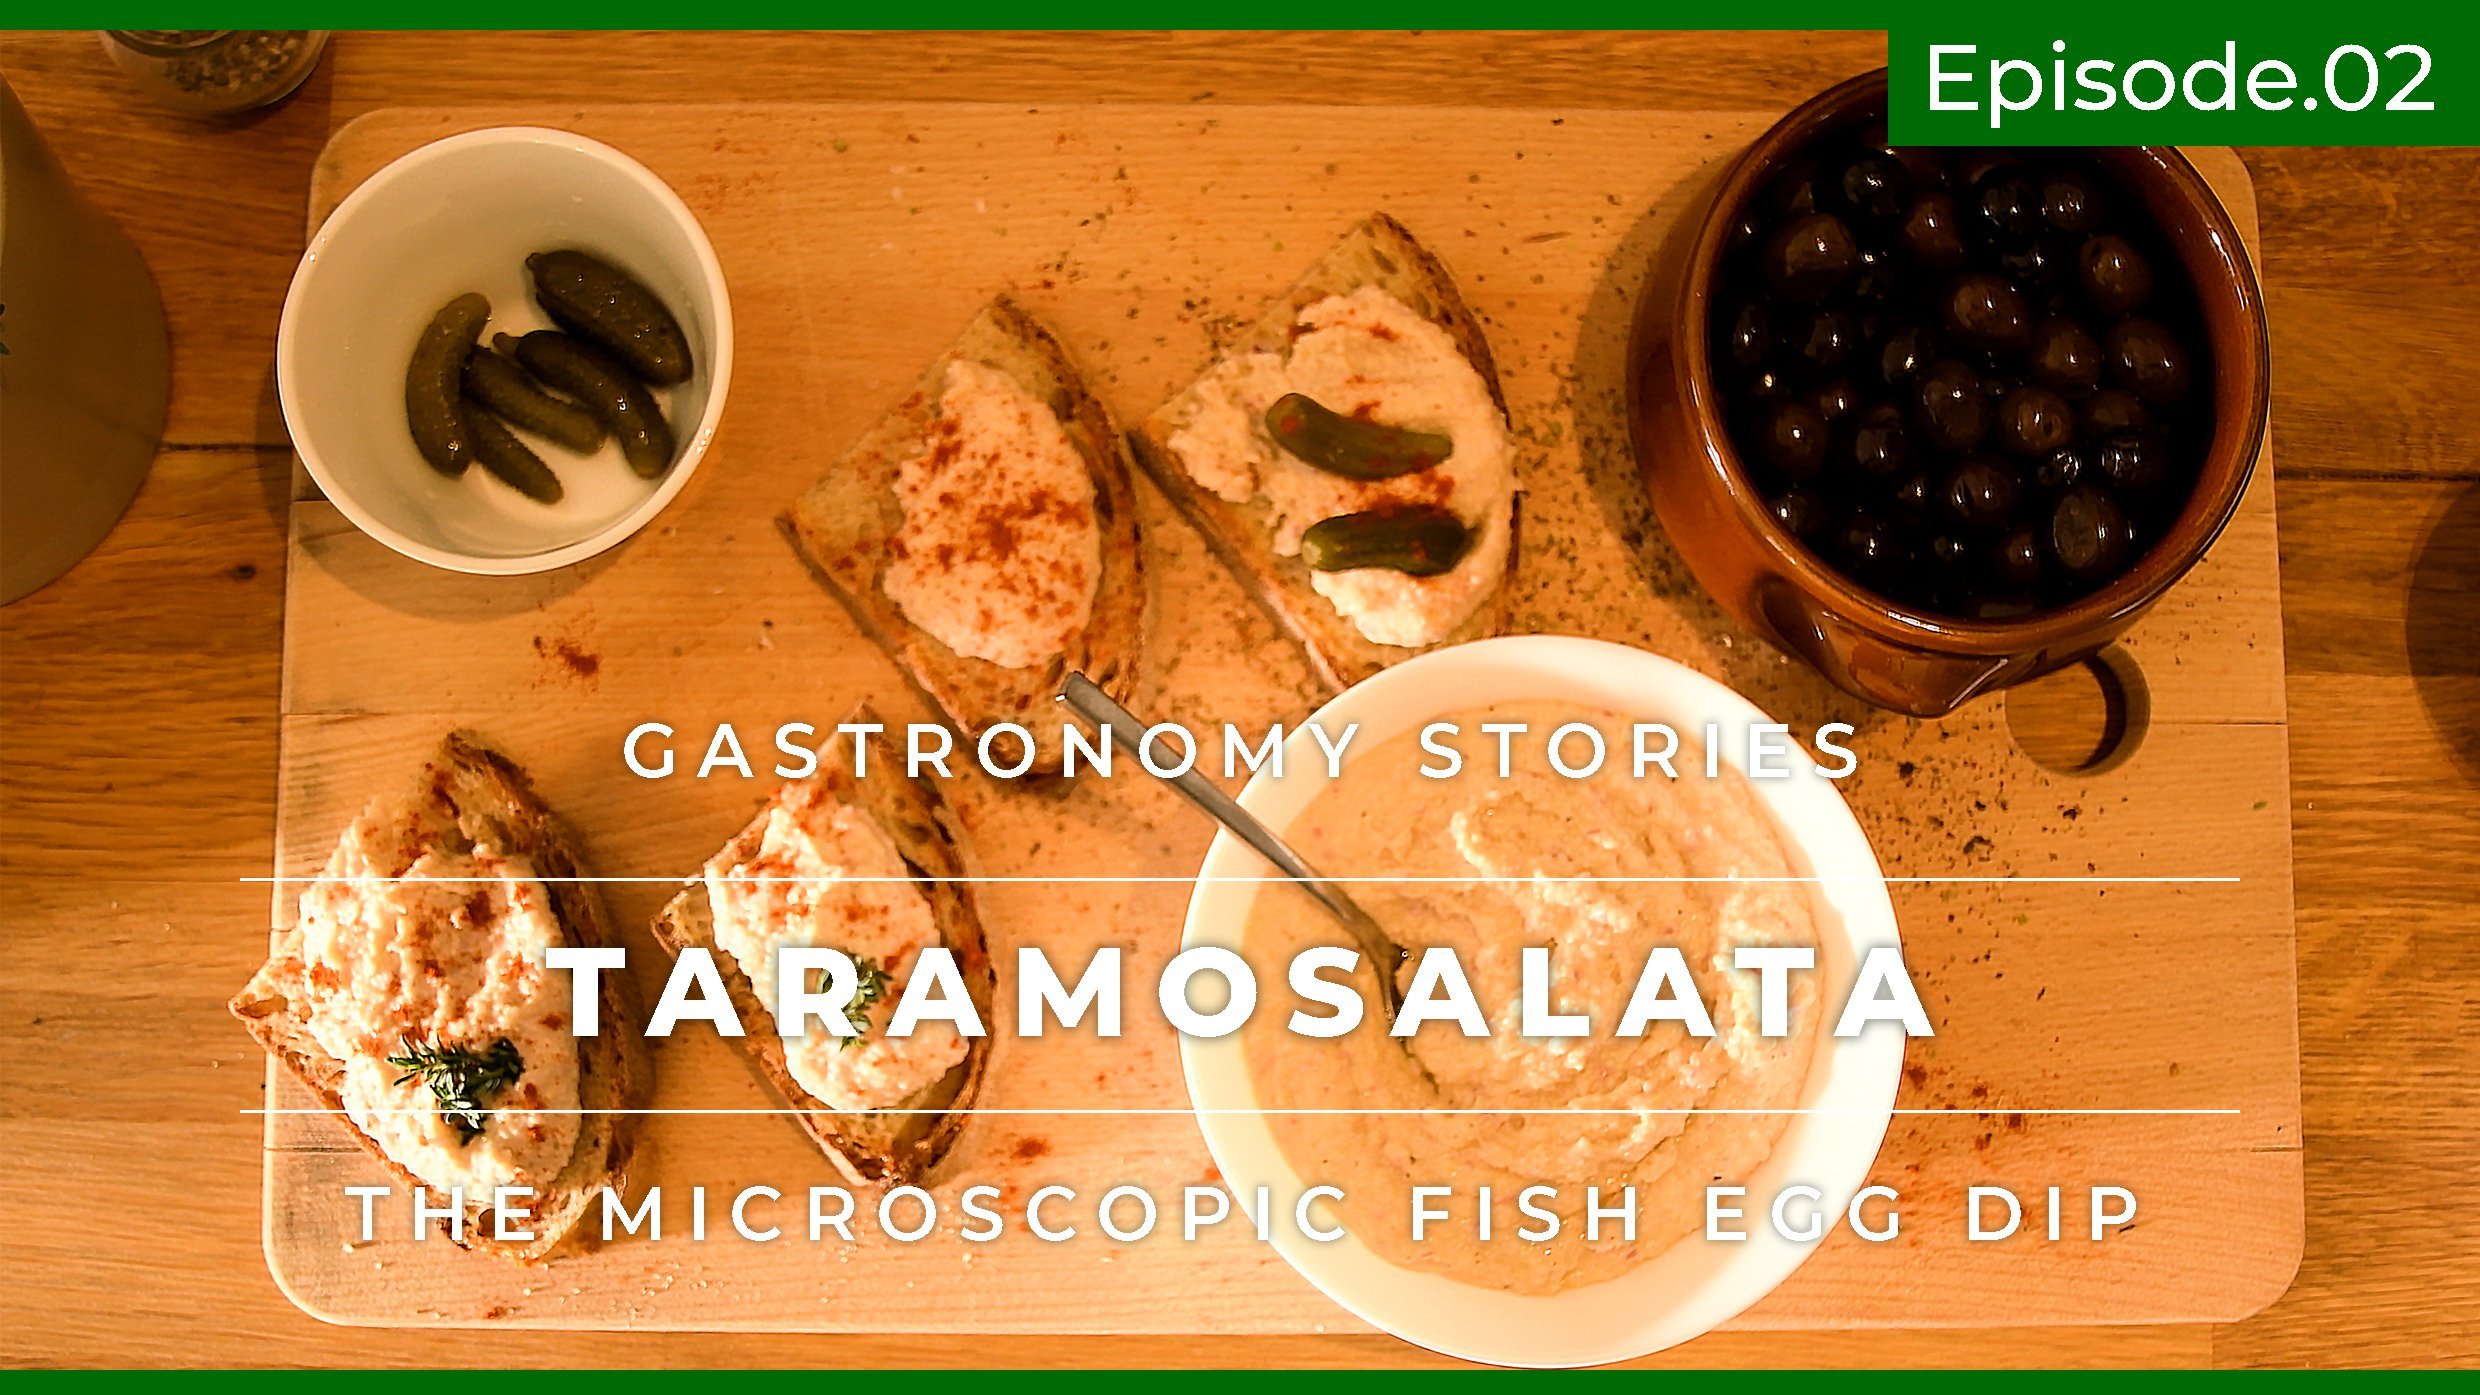 Taramosalata by our Chef Yannis Nino